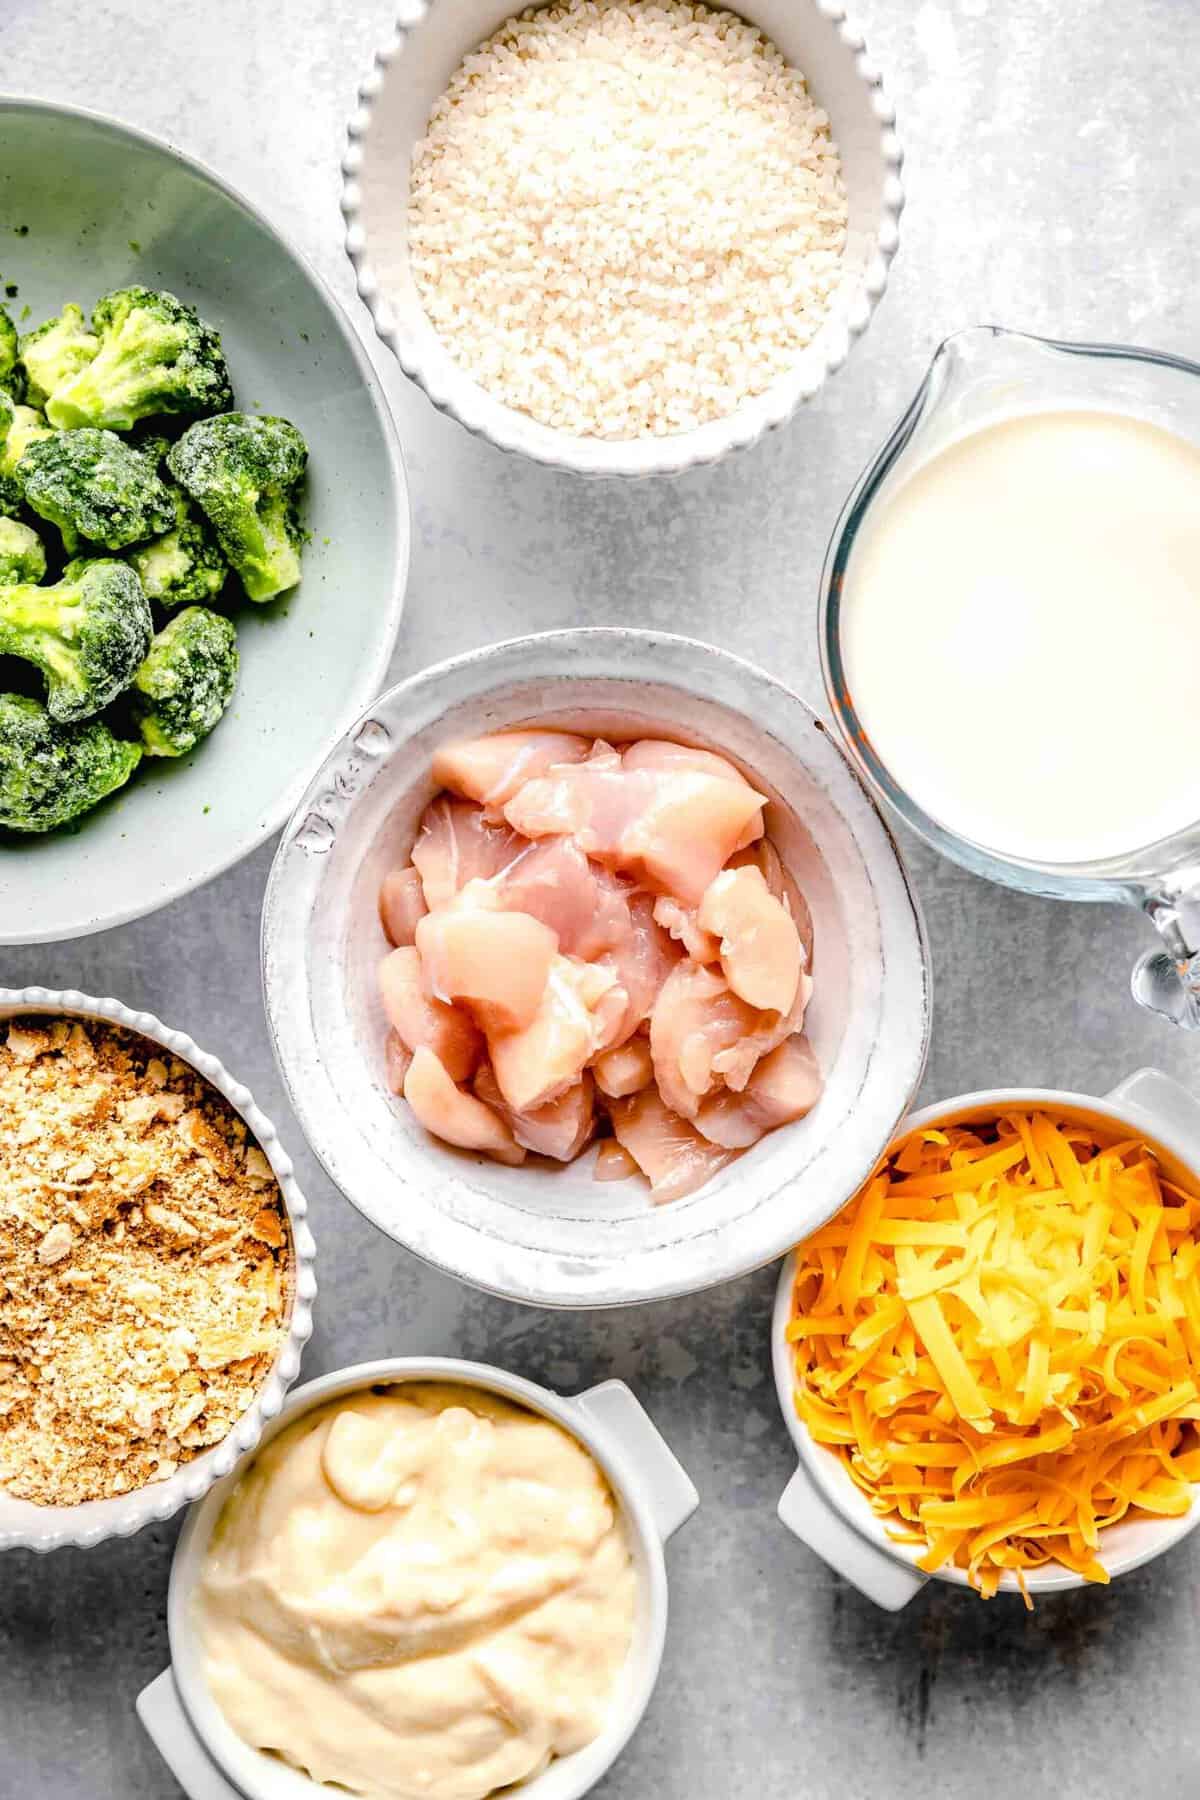 Ingredients for chicken broccoli rice casserole.